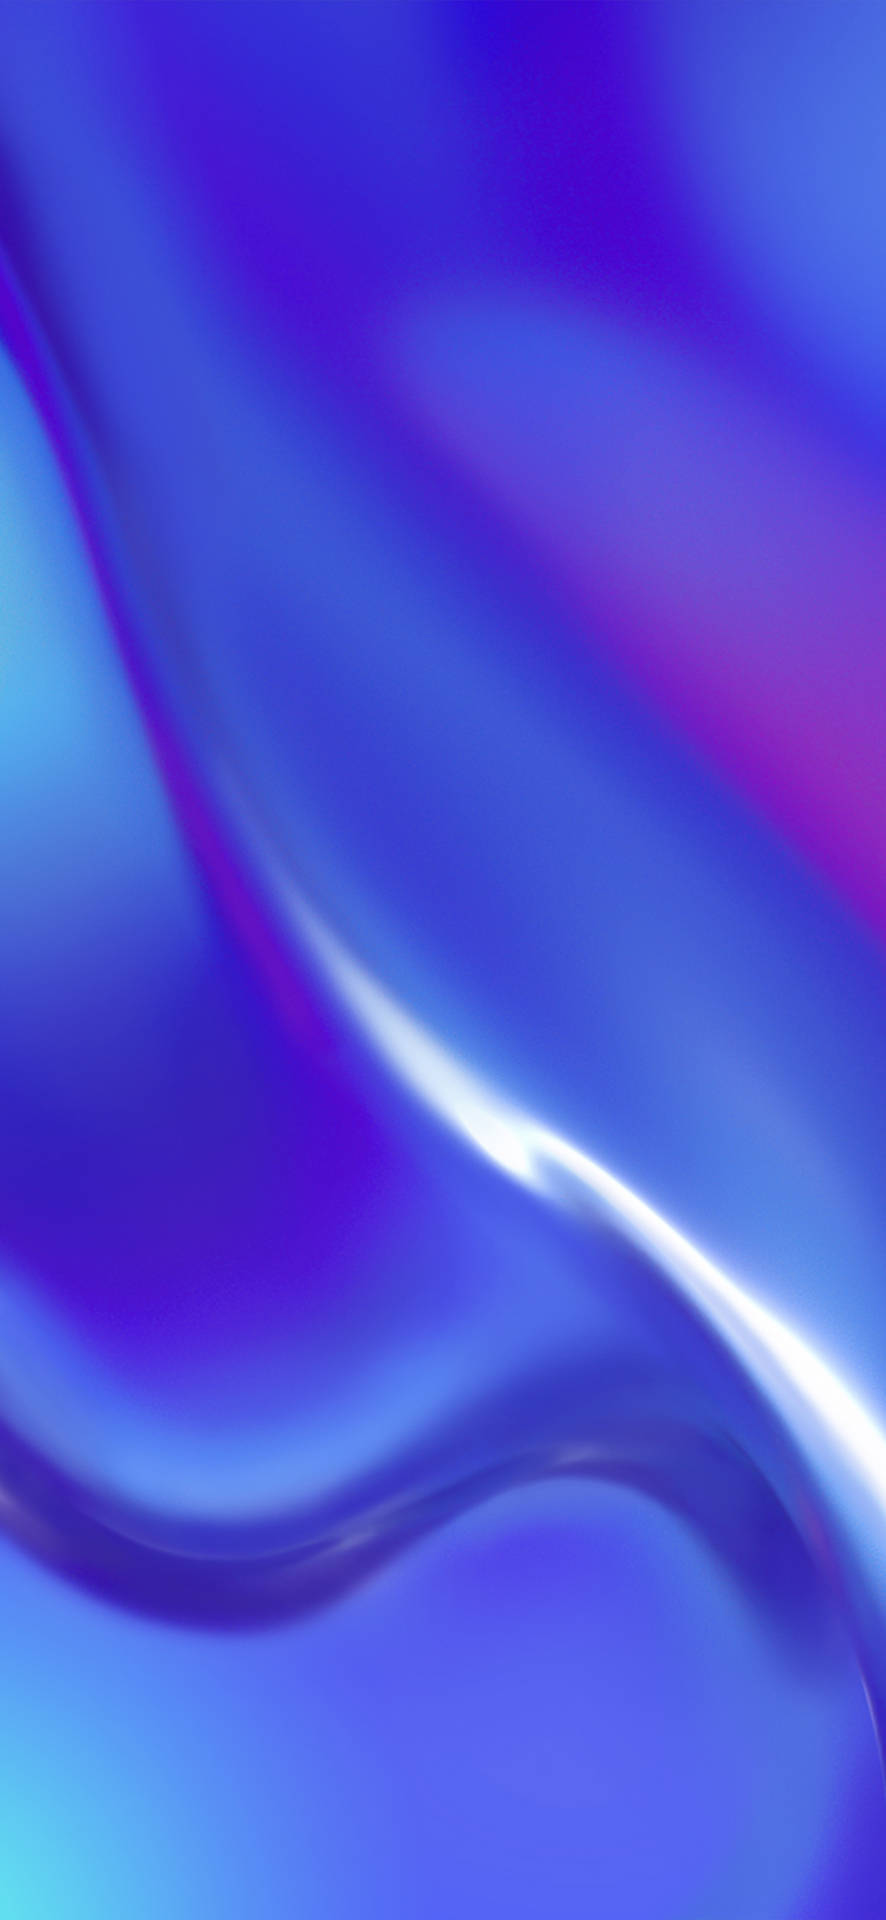 Resumenabstracto Iridiscente Violeta Azul Oppo A5s. Fondo de pantalla